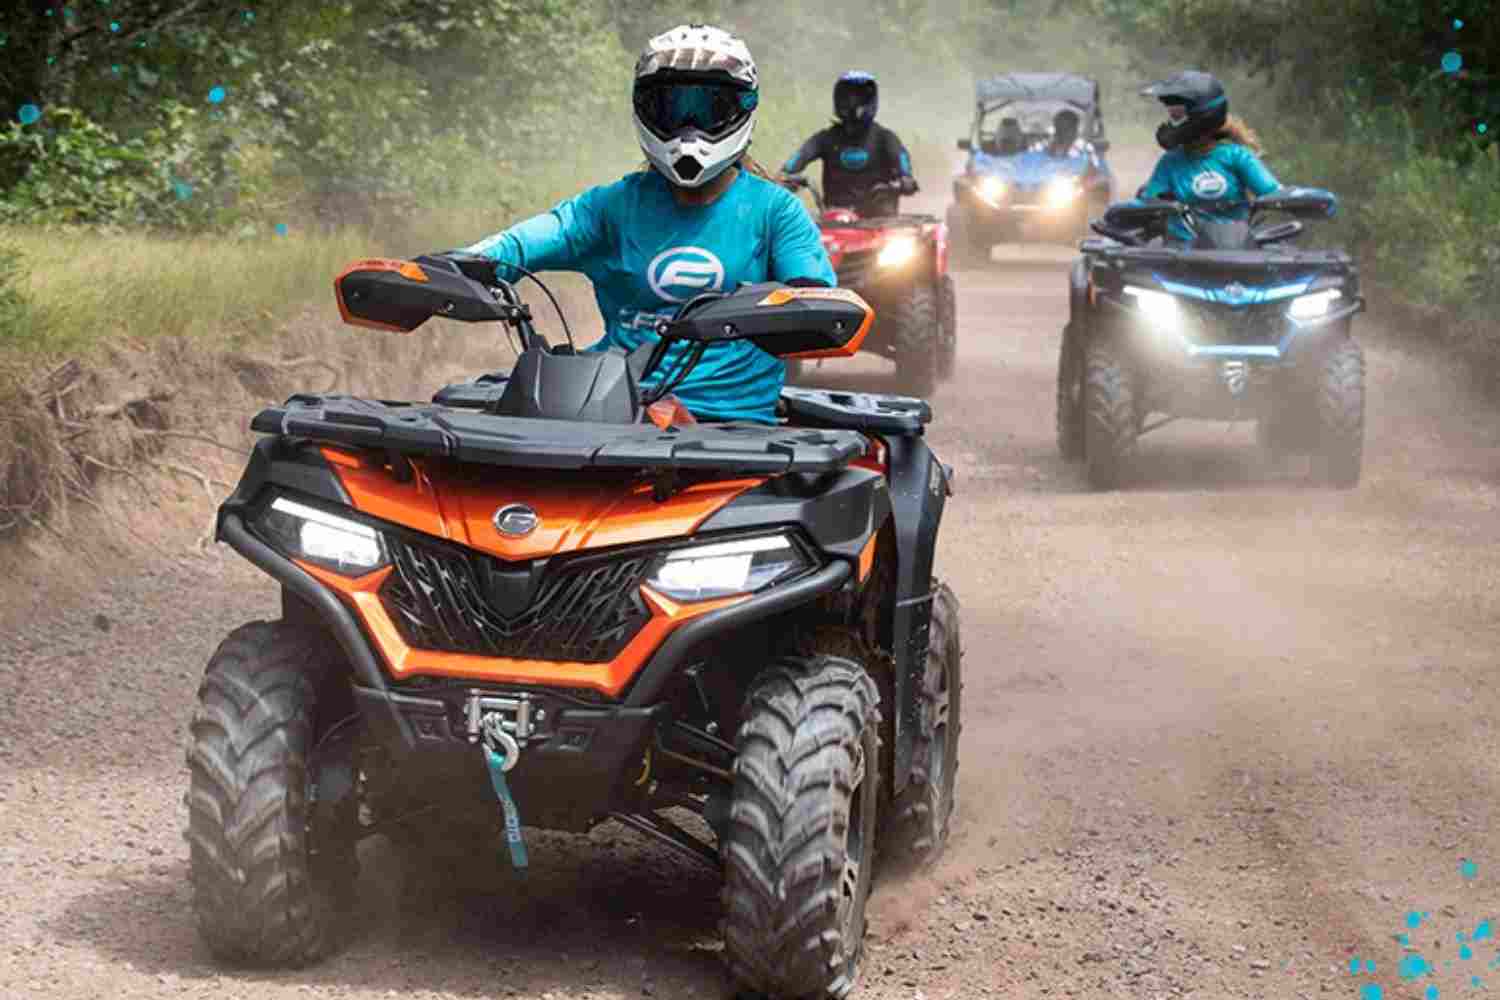 Jungle Safari With ATV Rides In Pune